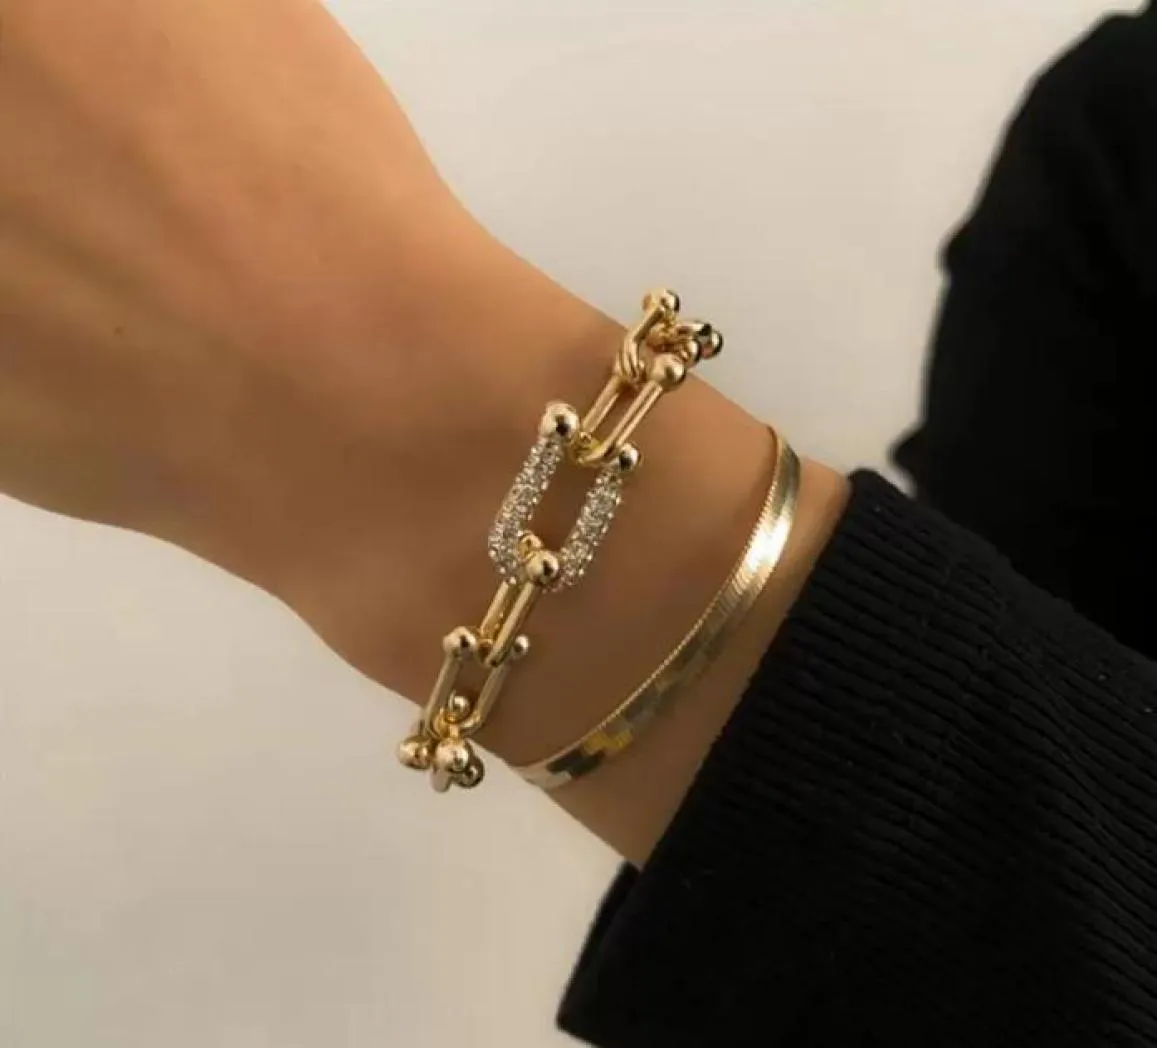 Link Chain Crystal Ushaped Buckle Metal Bangle Bracelet Statement Gold Silver Color Link Fashion Pulseras Women Gift1629887